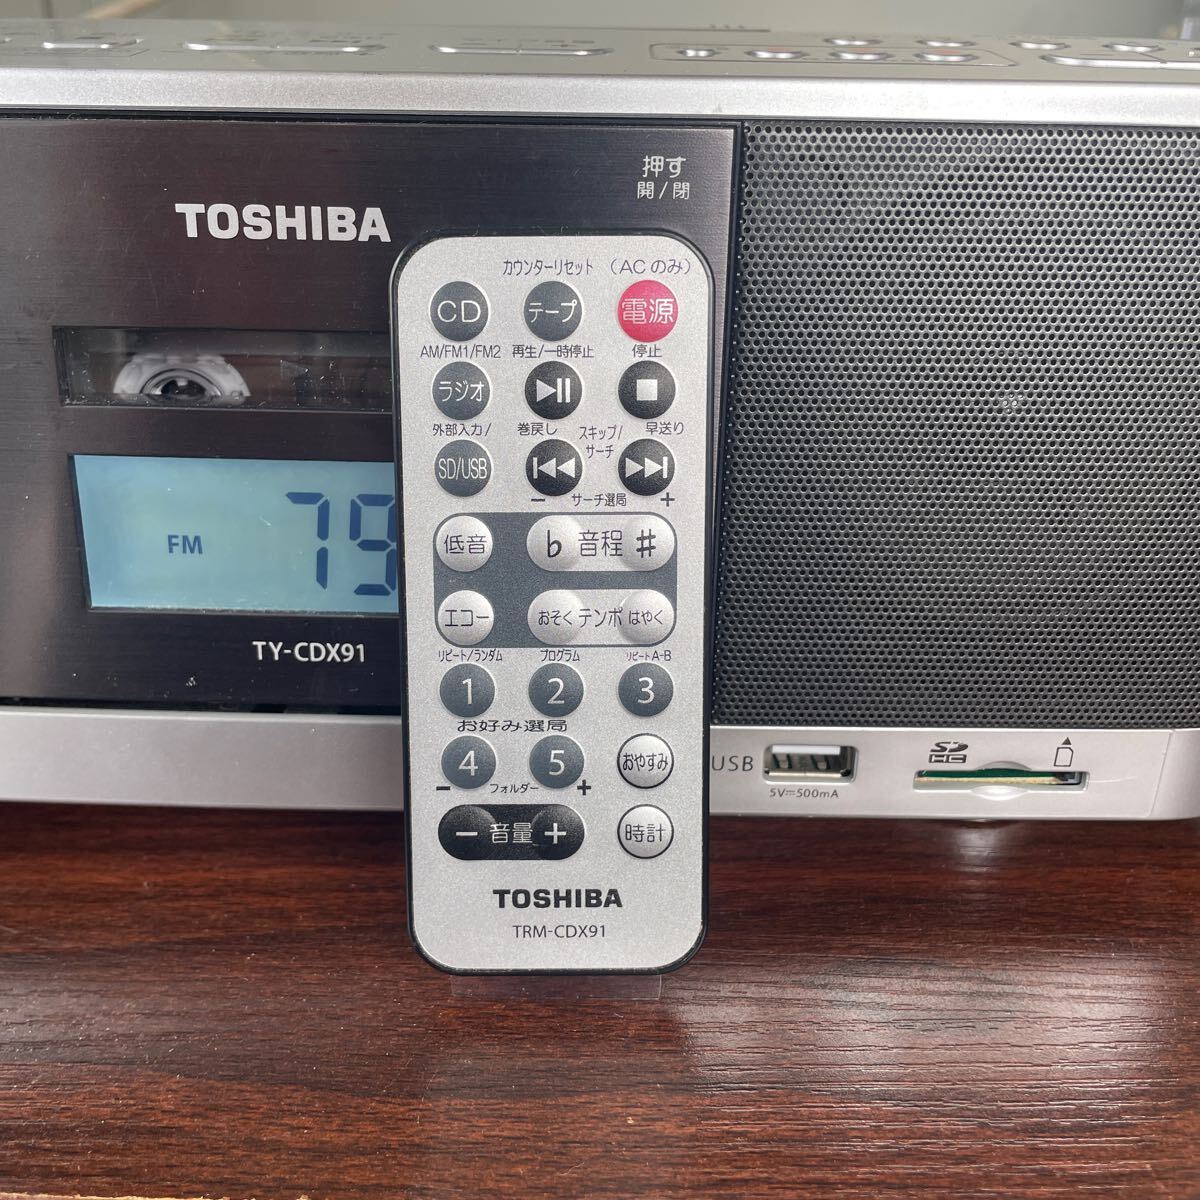 TOSHIBA Toshiba SD/USB/CD radio cassette recorder TY-CDX91 2022 year made 